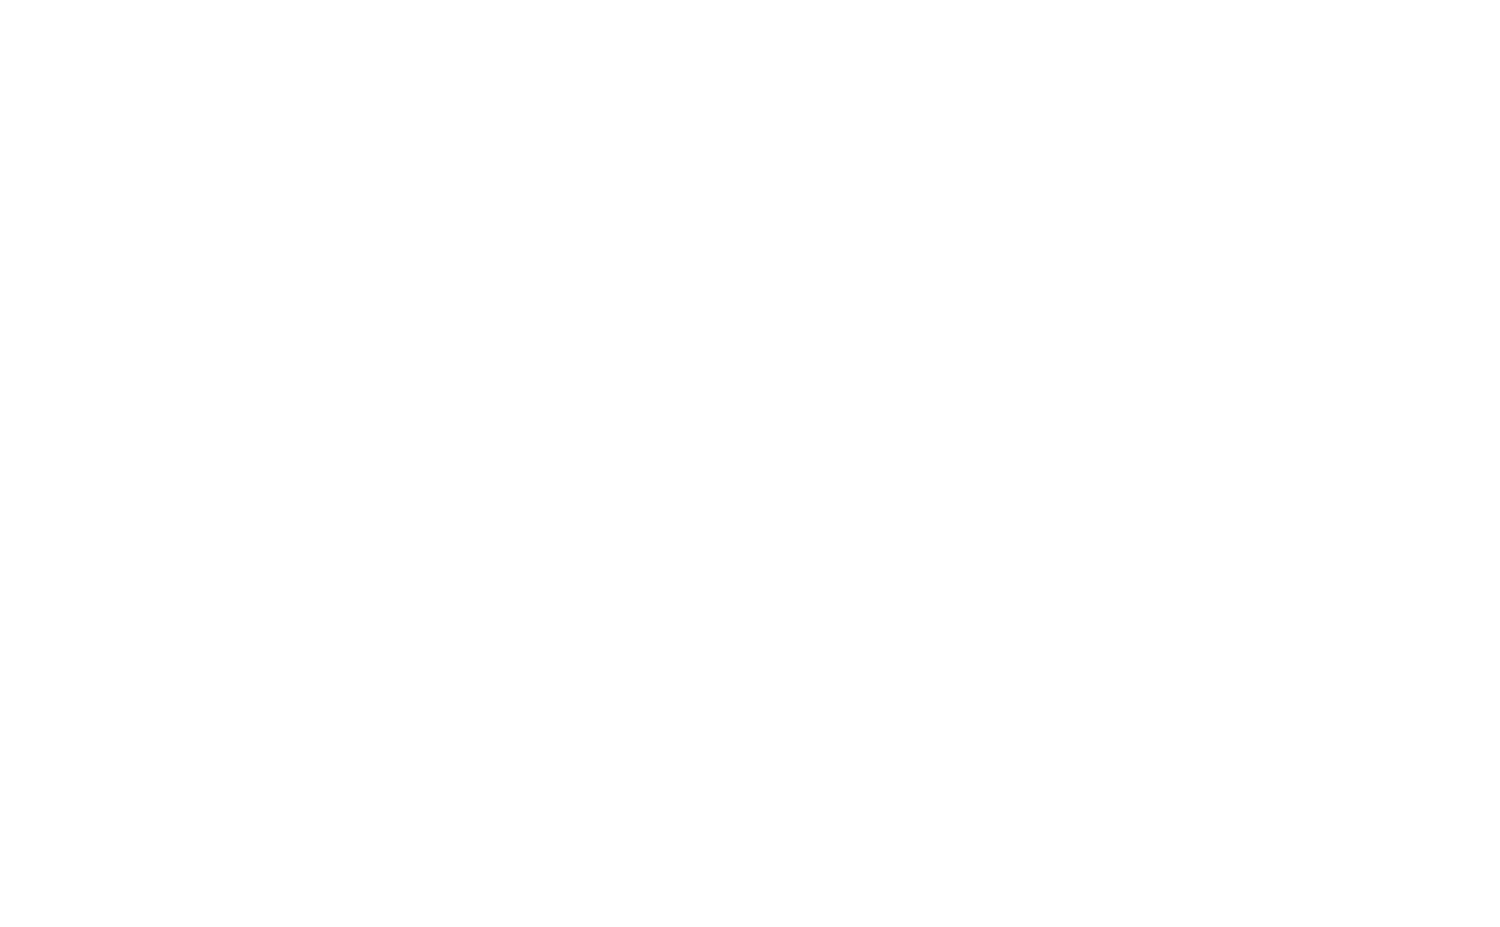 A crest logo from Westport Lofts in Belville, North Carolina